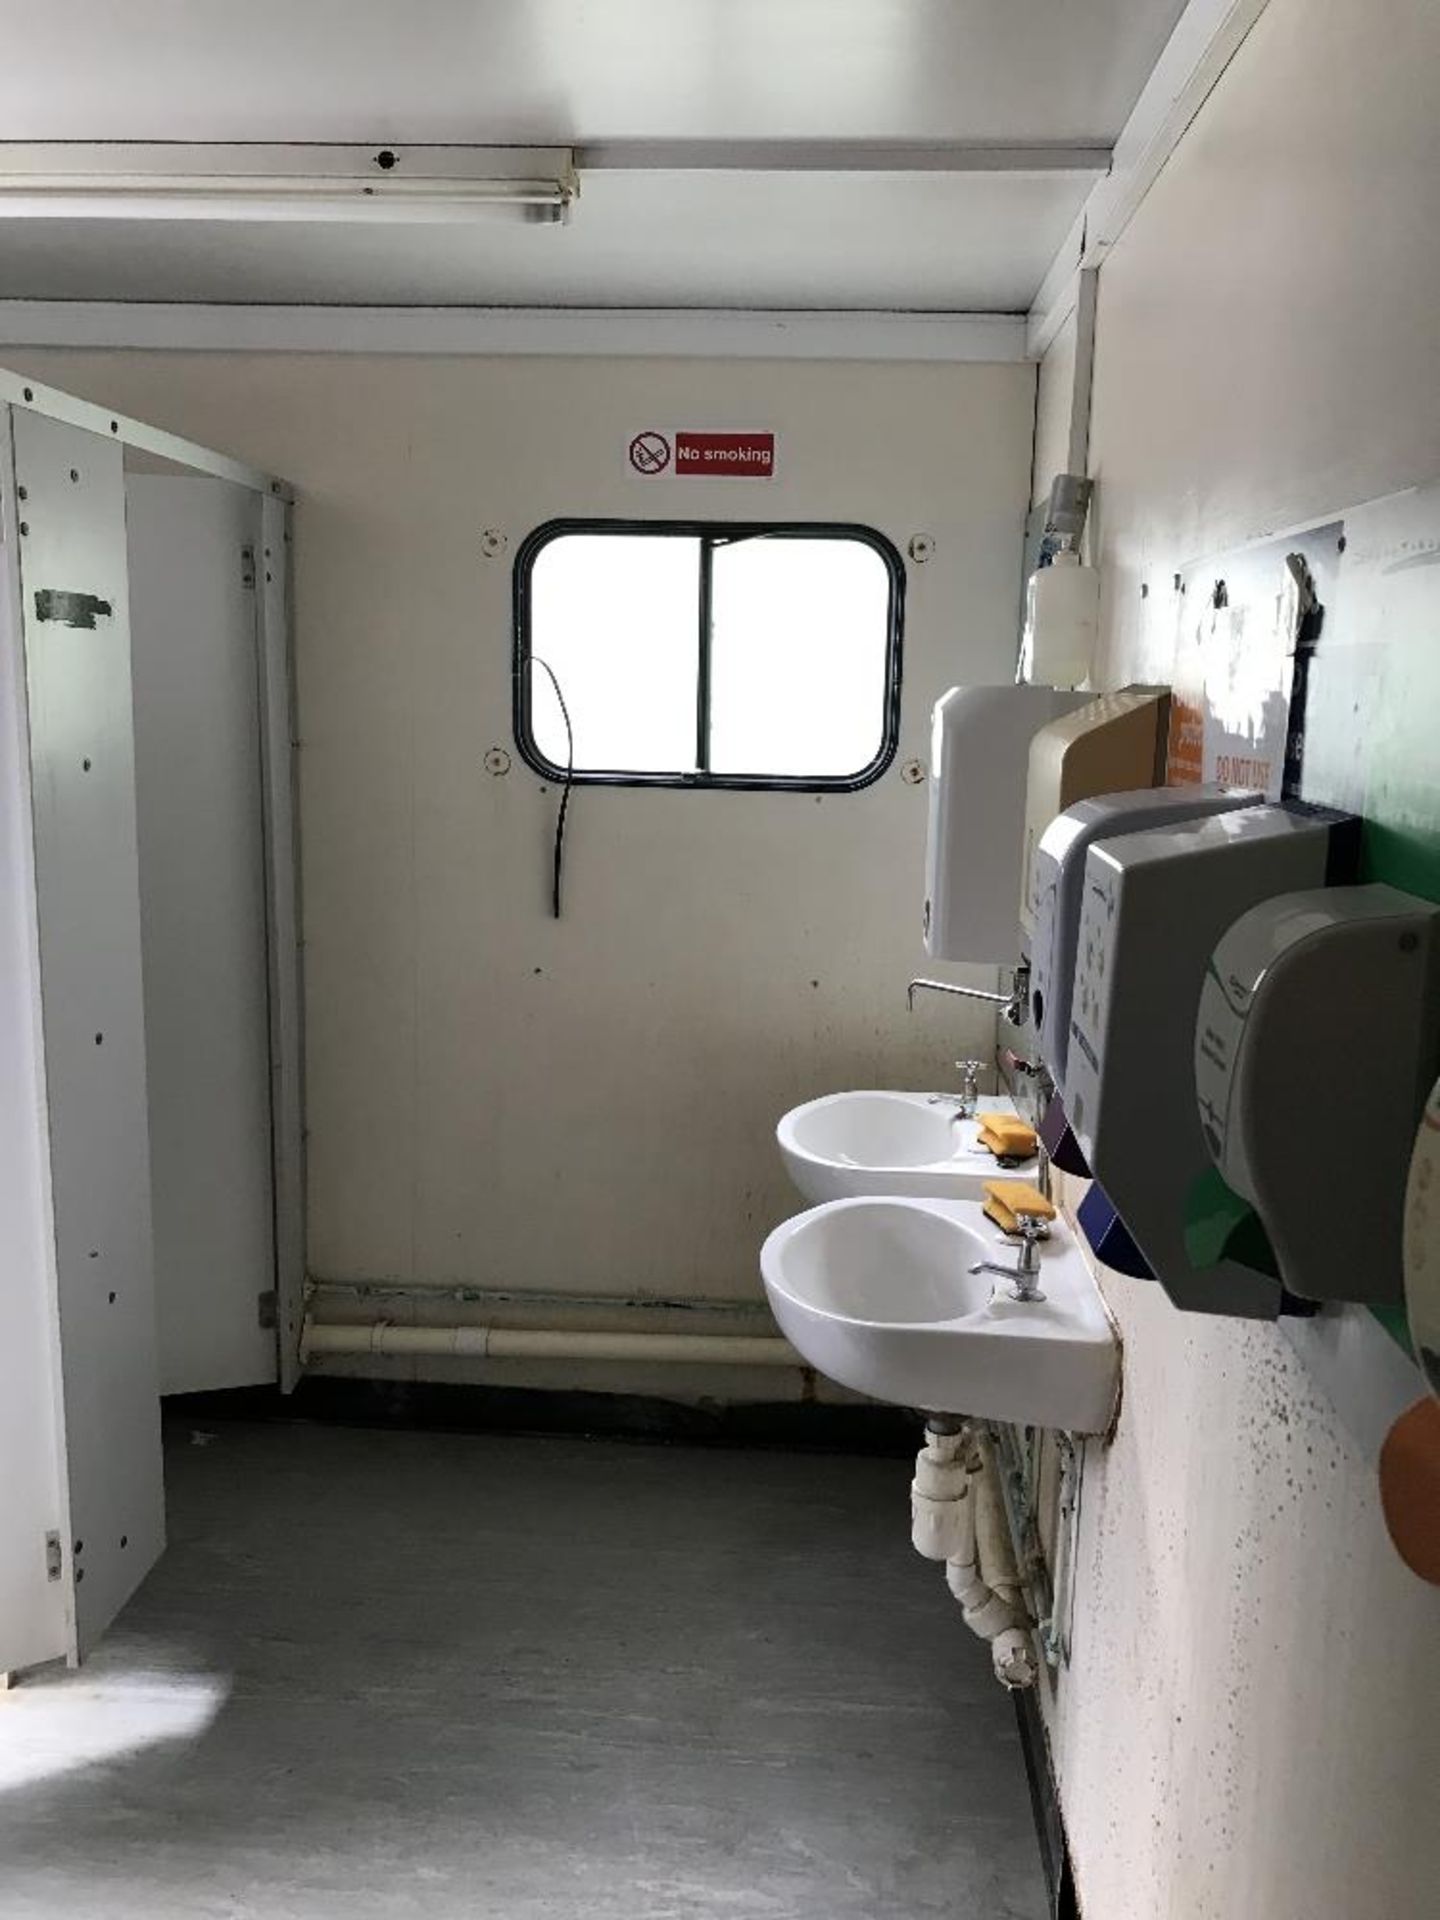 Portacabin jack legged staff toilet unit - Bild 5 aus 12